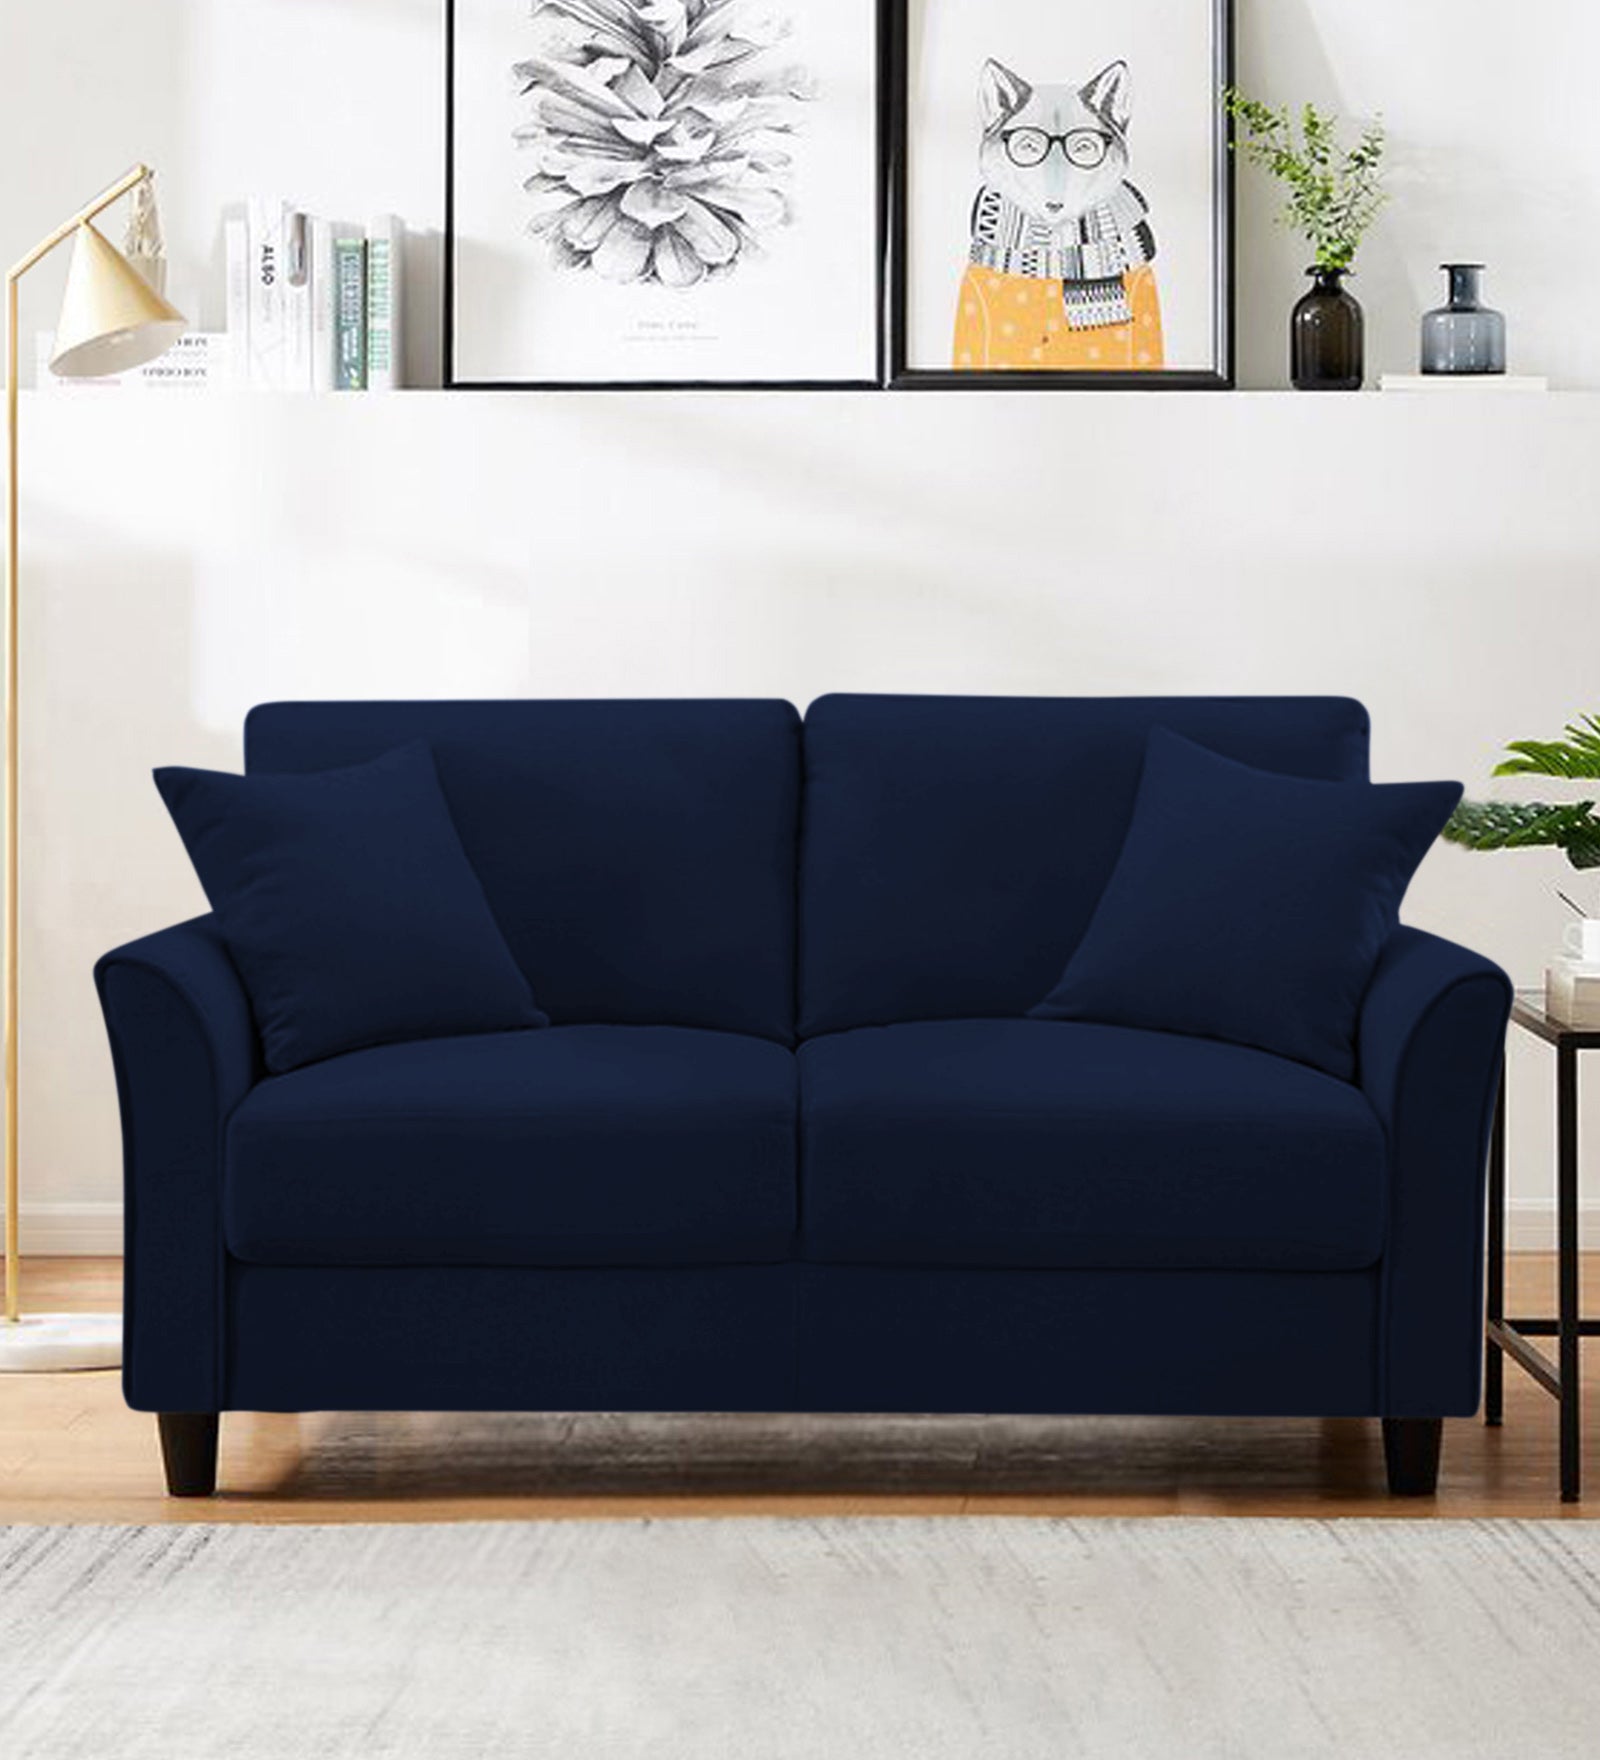 Daroo Velvet 2 Seater Sofa In Indigo Blue Colour